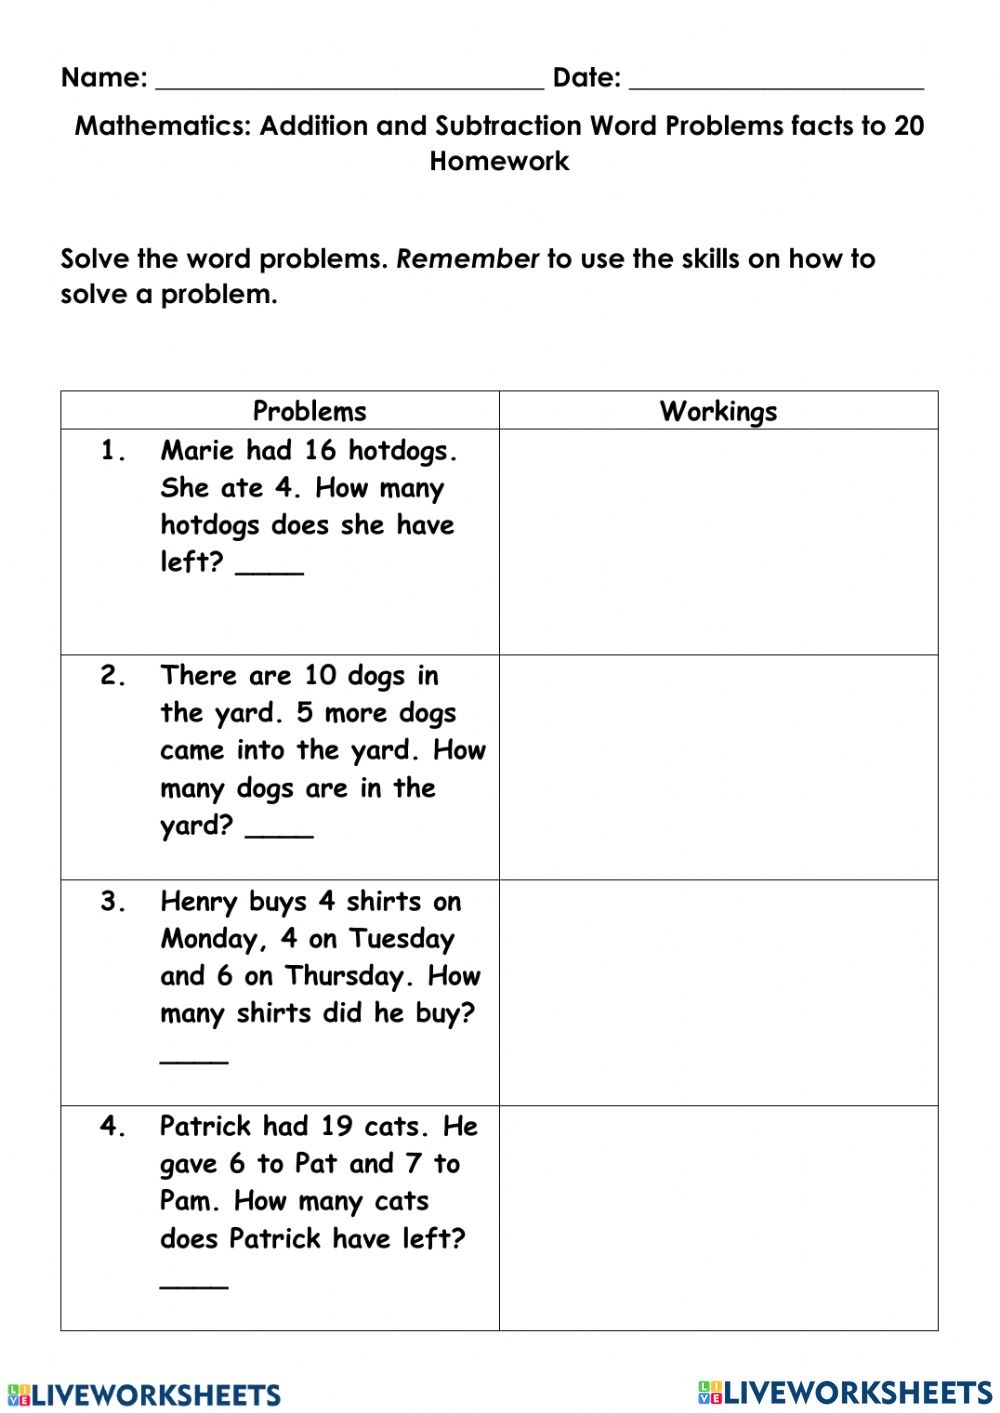 math-statement-problems-worksheet-math-worksheet-answers